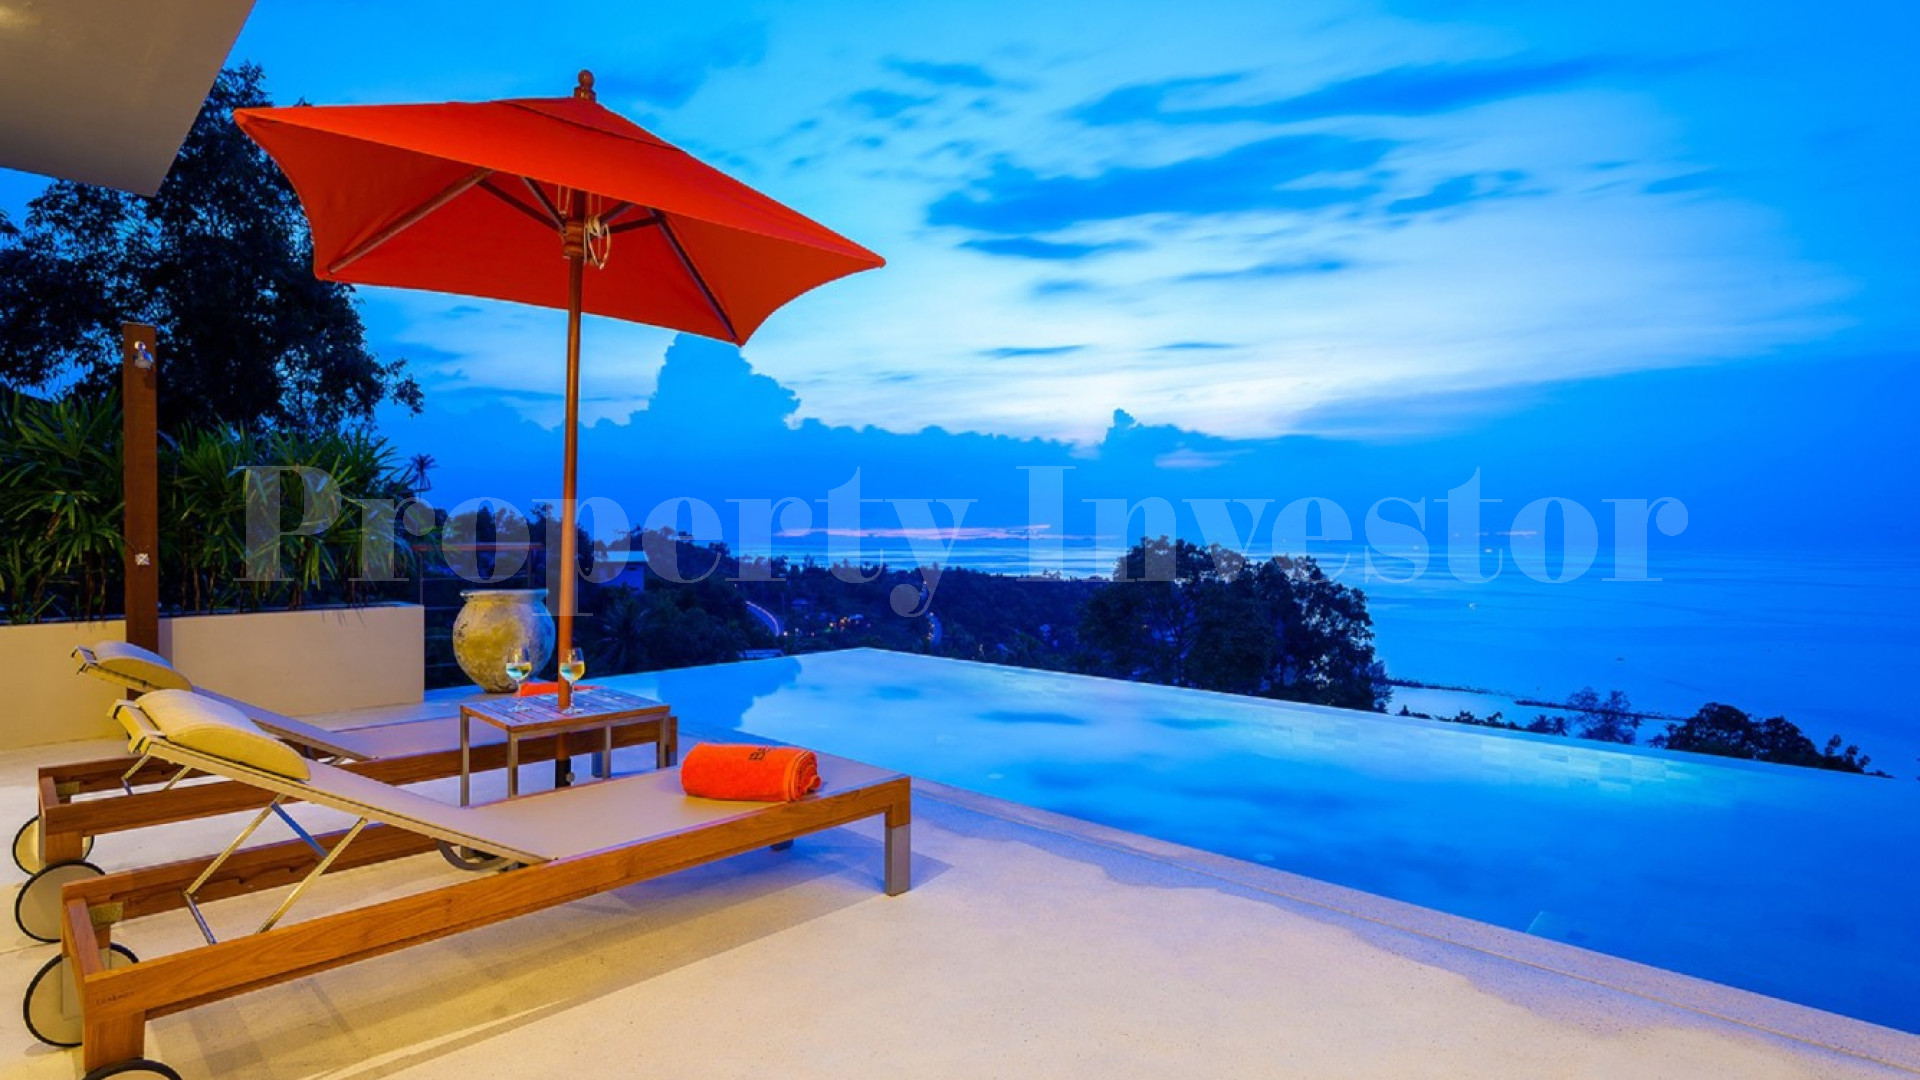 Spacious 3 Bedroom Luxury Seaview Resort Community Villa for Sale on Koh Phangan, Thailand